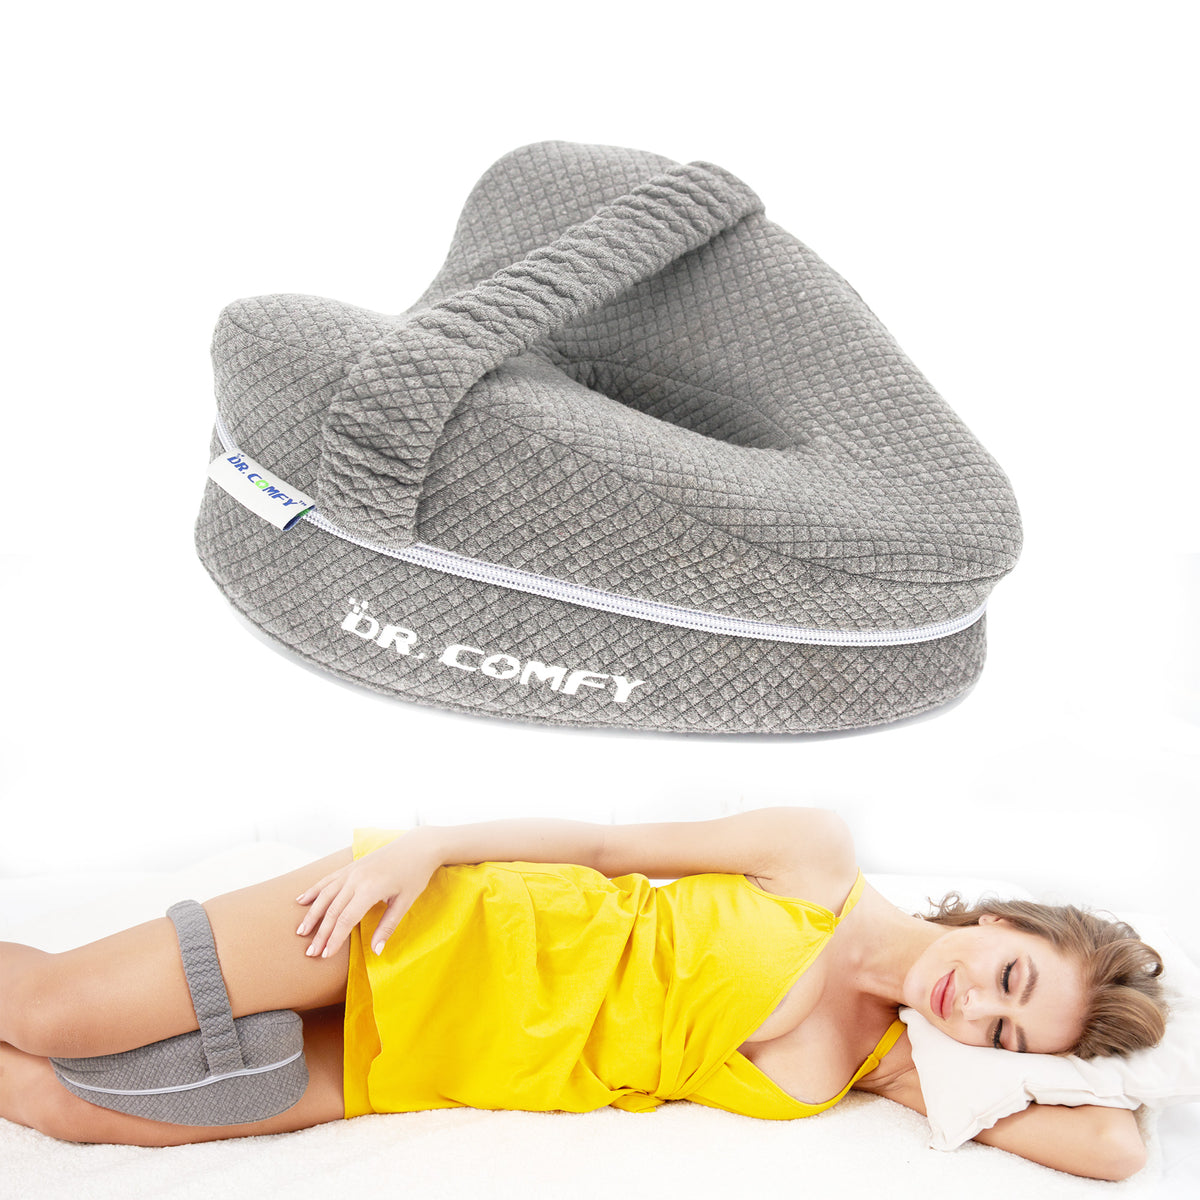 Everlasting Comfort Knee Pillow for Sleeping - Prevents Knee